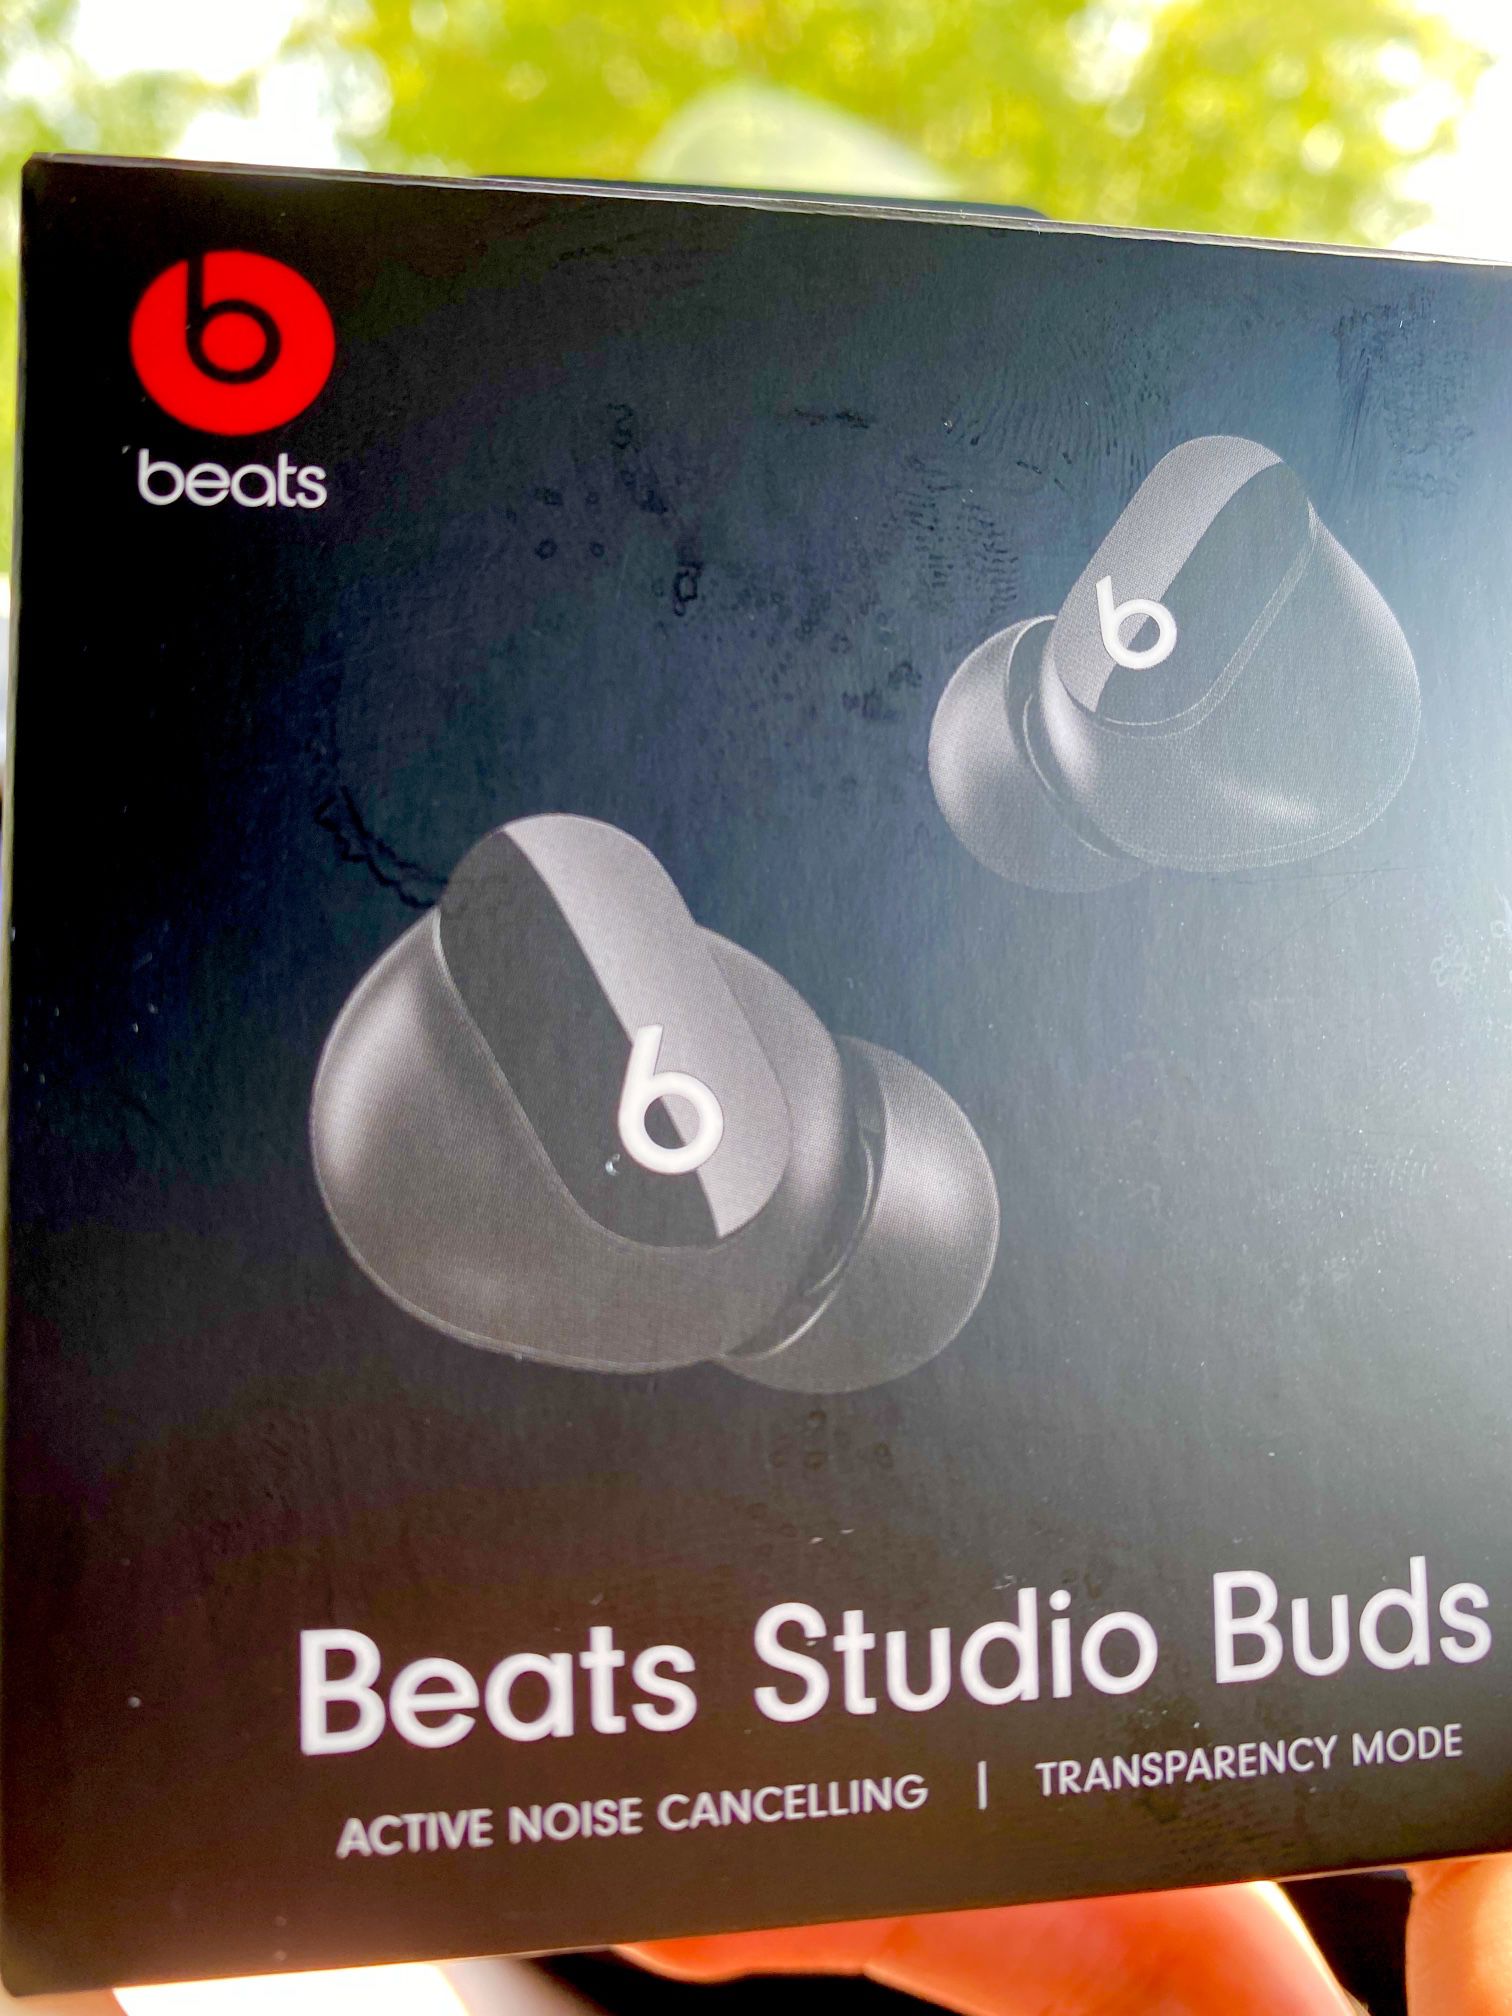 New Beats Studio Buds Box